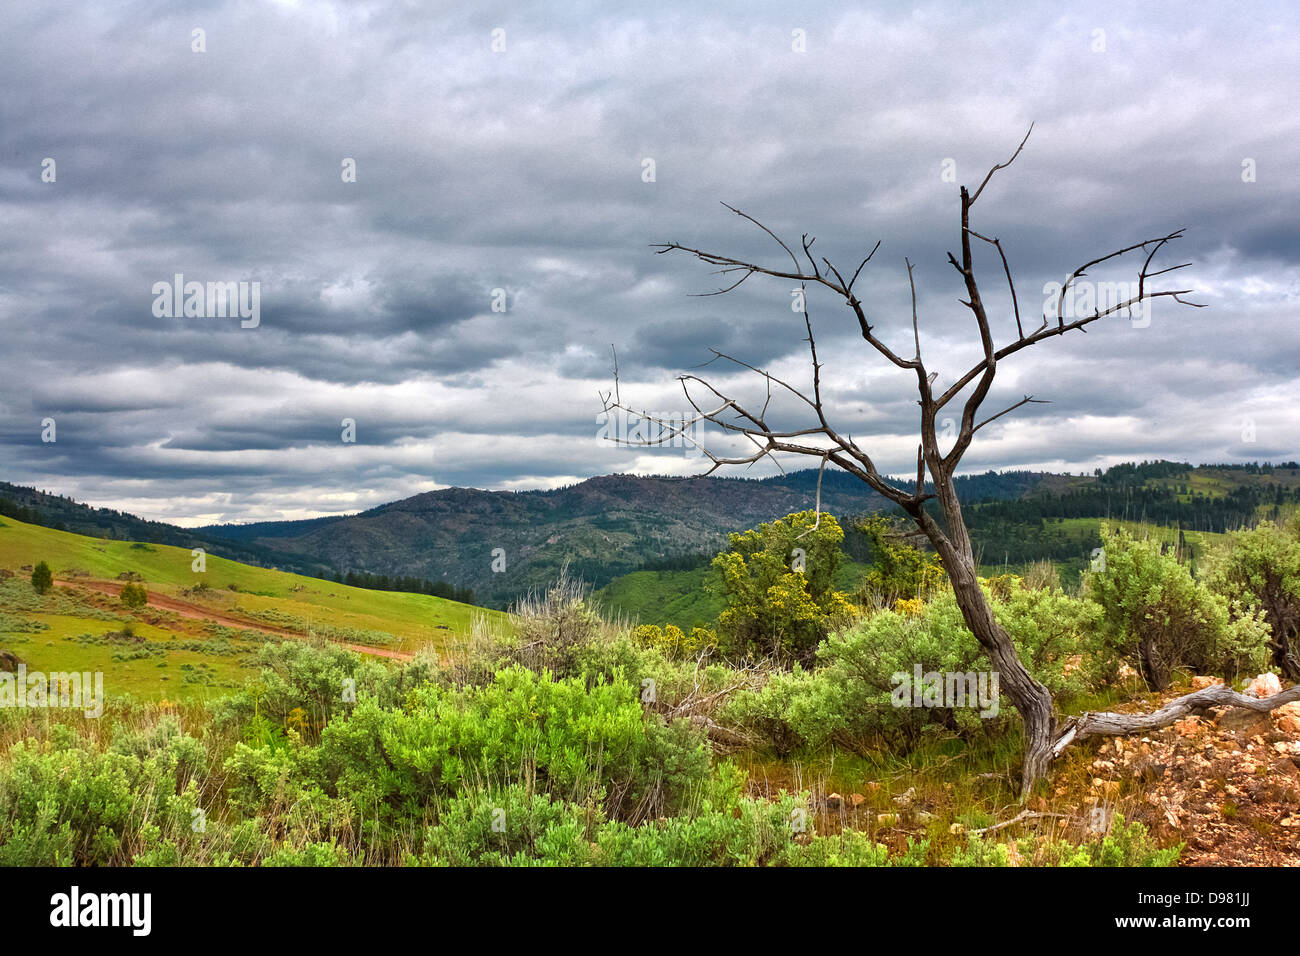 Dead tree on sagebrush-covered hillside against stormy skies outside Pearl, Idaho Stock Photo